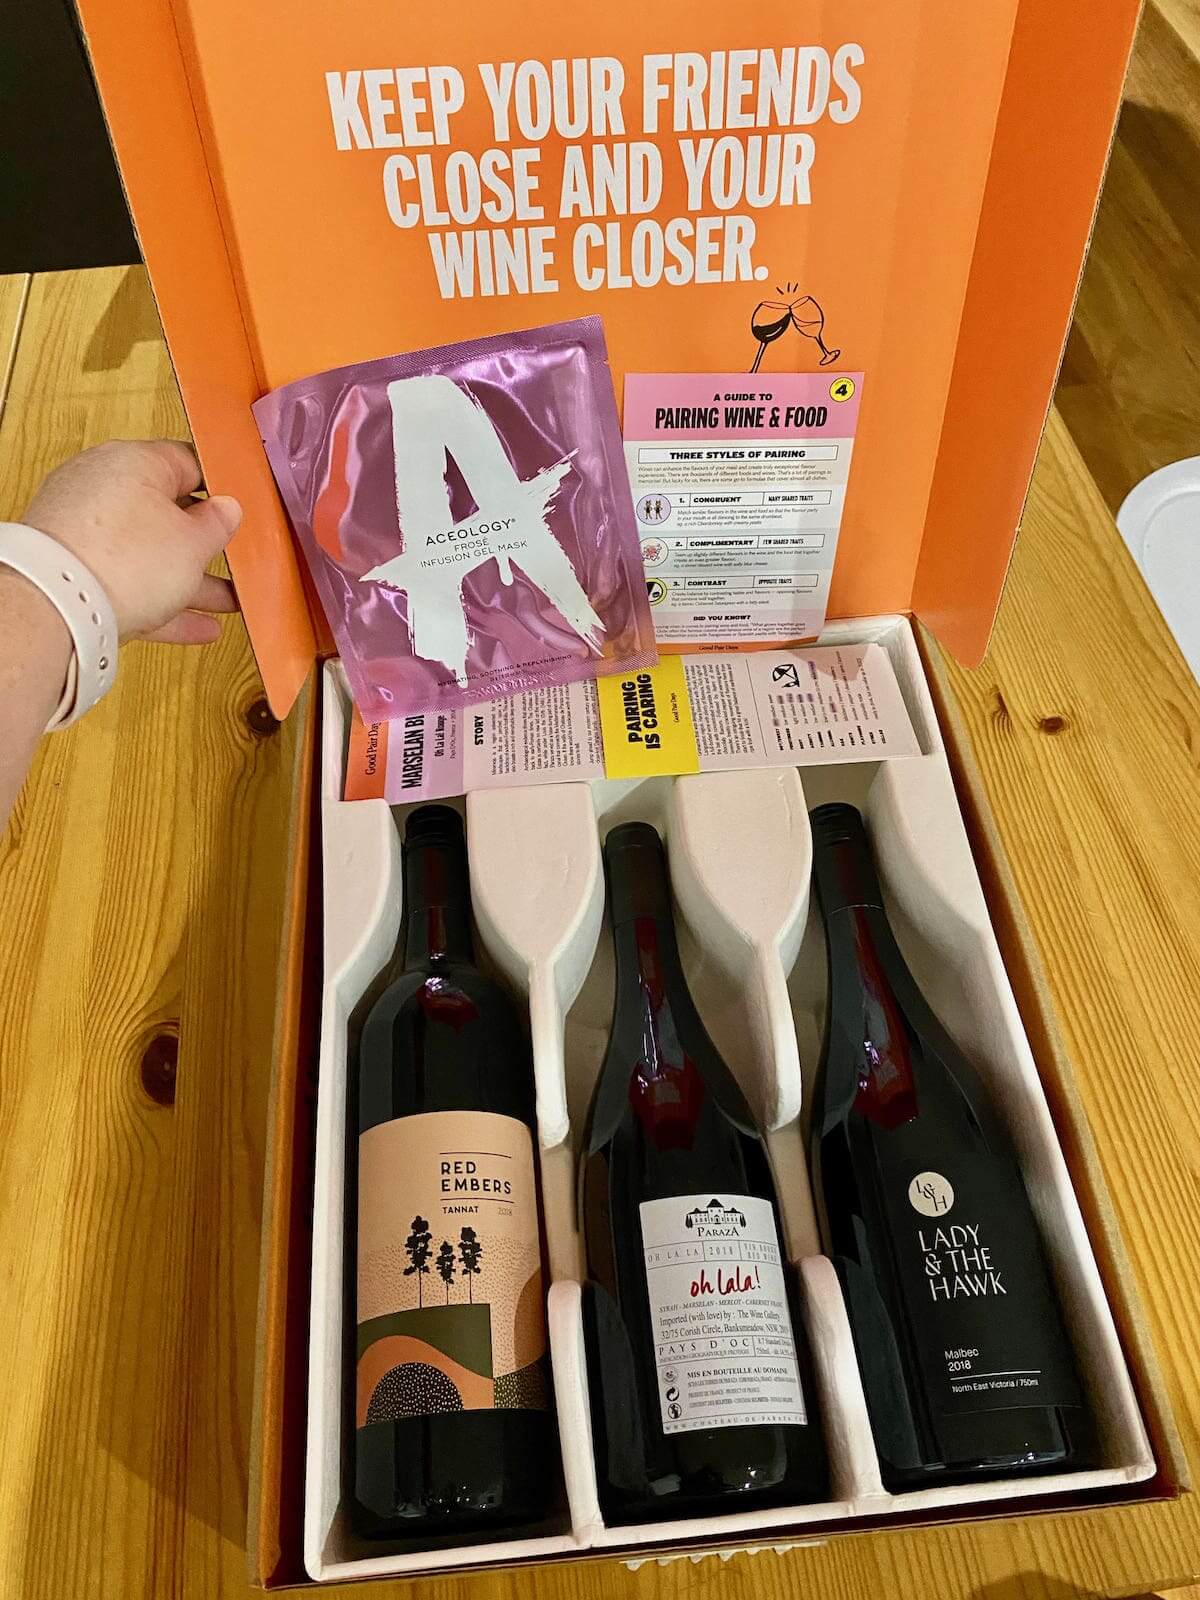 Good Pair Days Wine Subscription Box - Australia